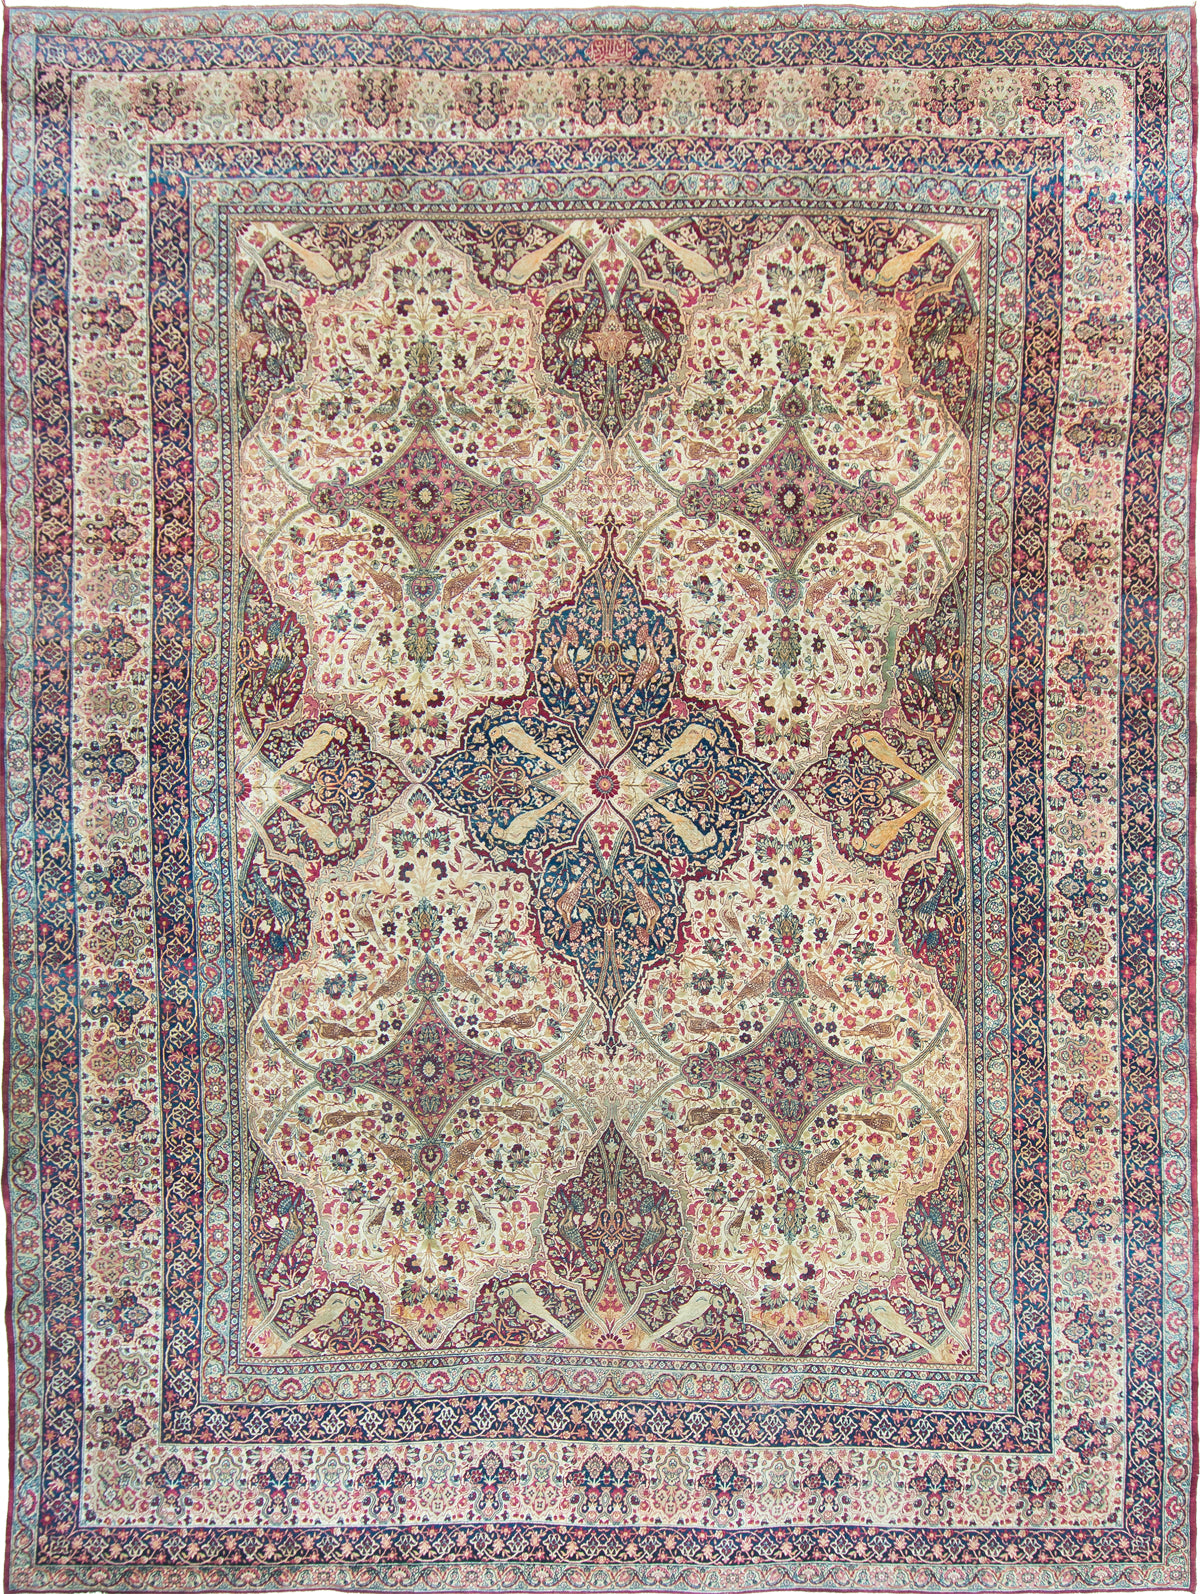 Antique Persian Lavar Kerman Late 1800's 58619